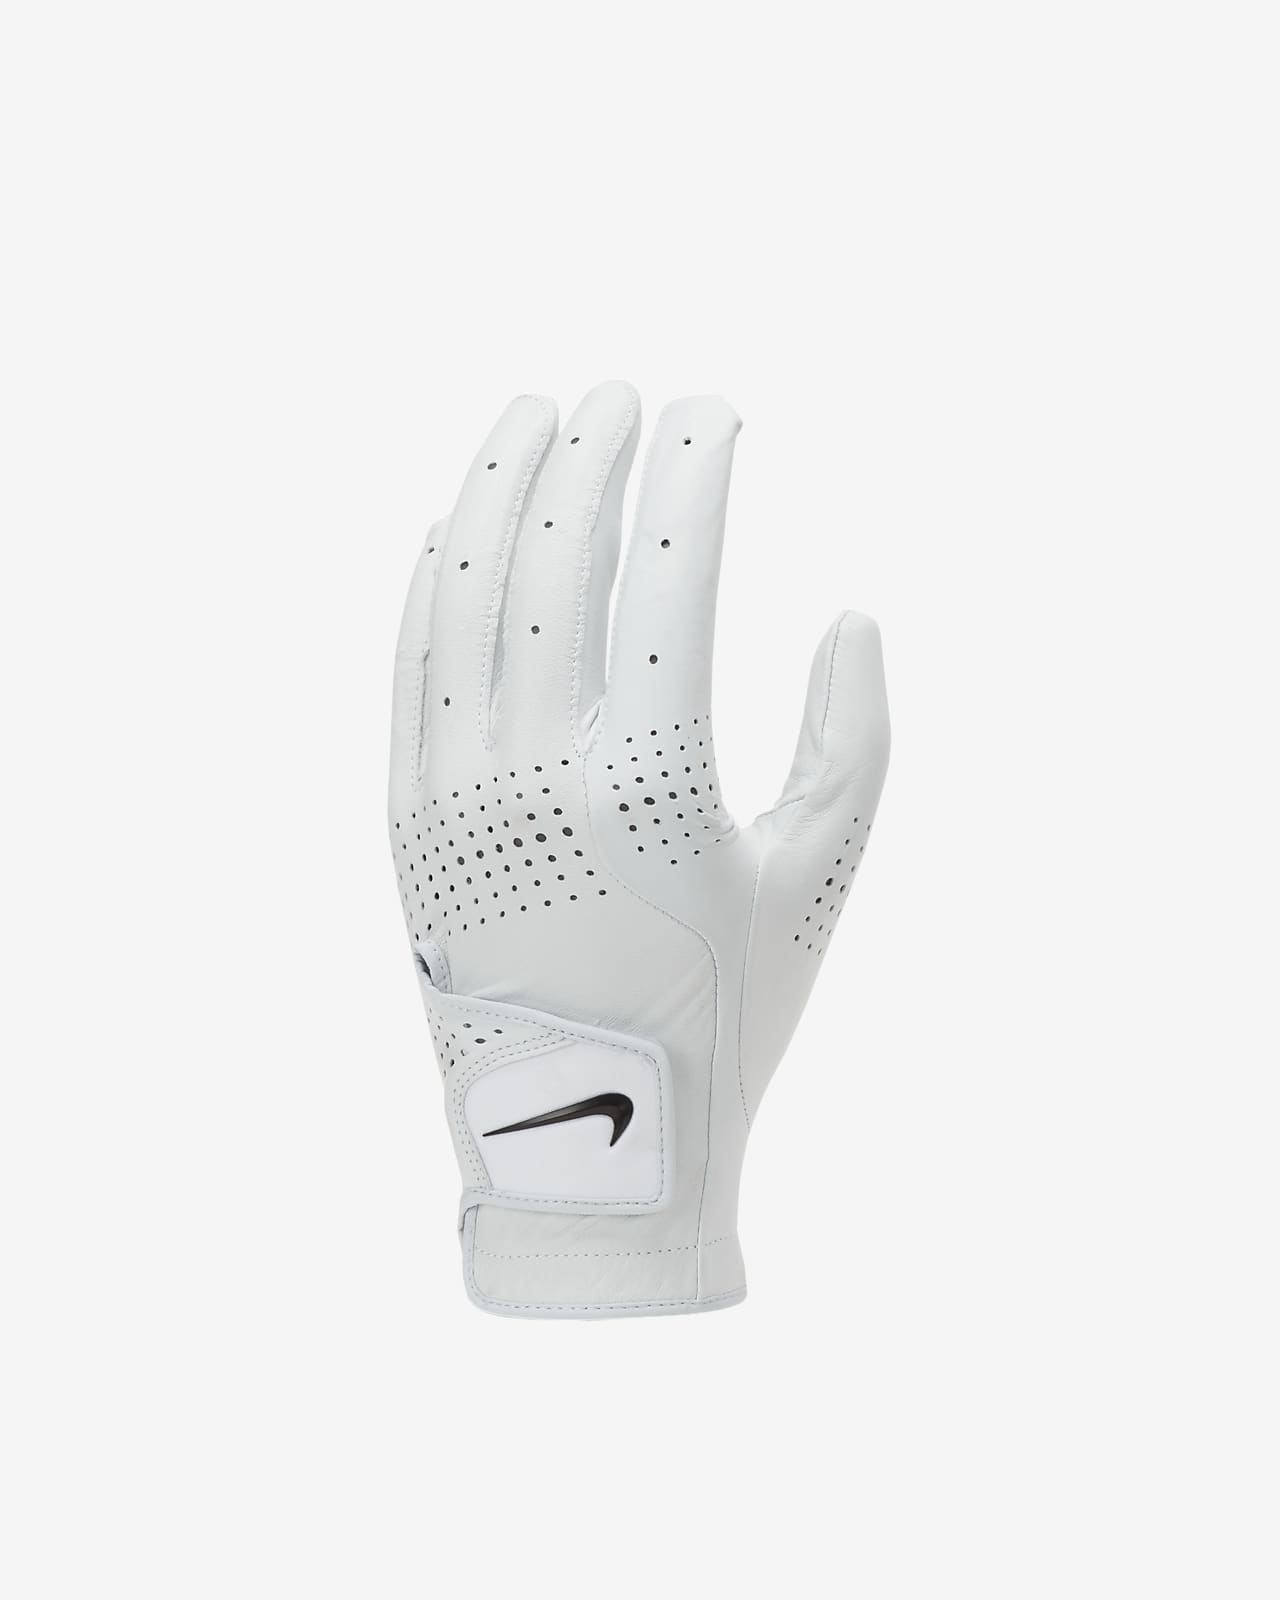 Nike Tour Classic 3 Golf Glove (Left Cadet)